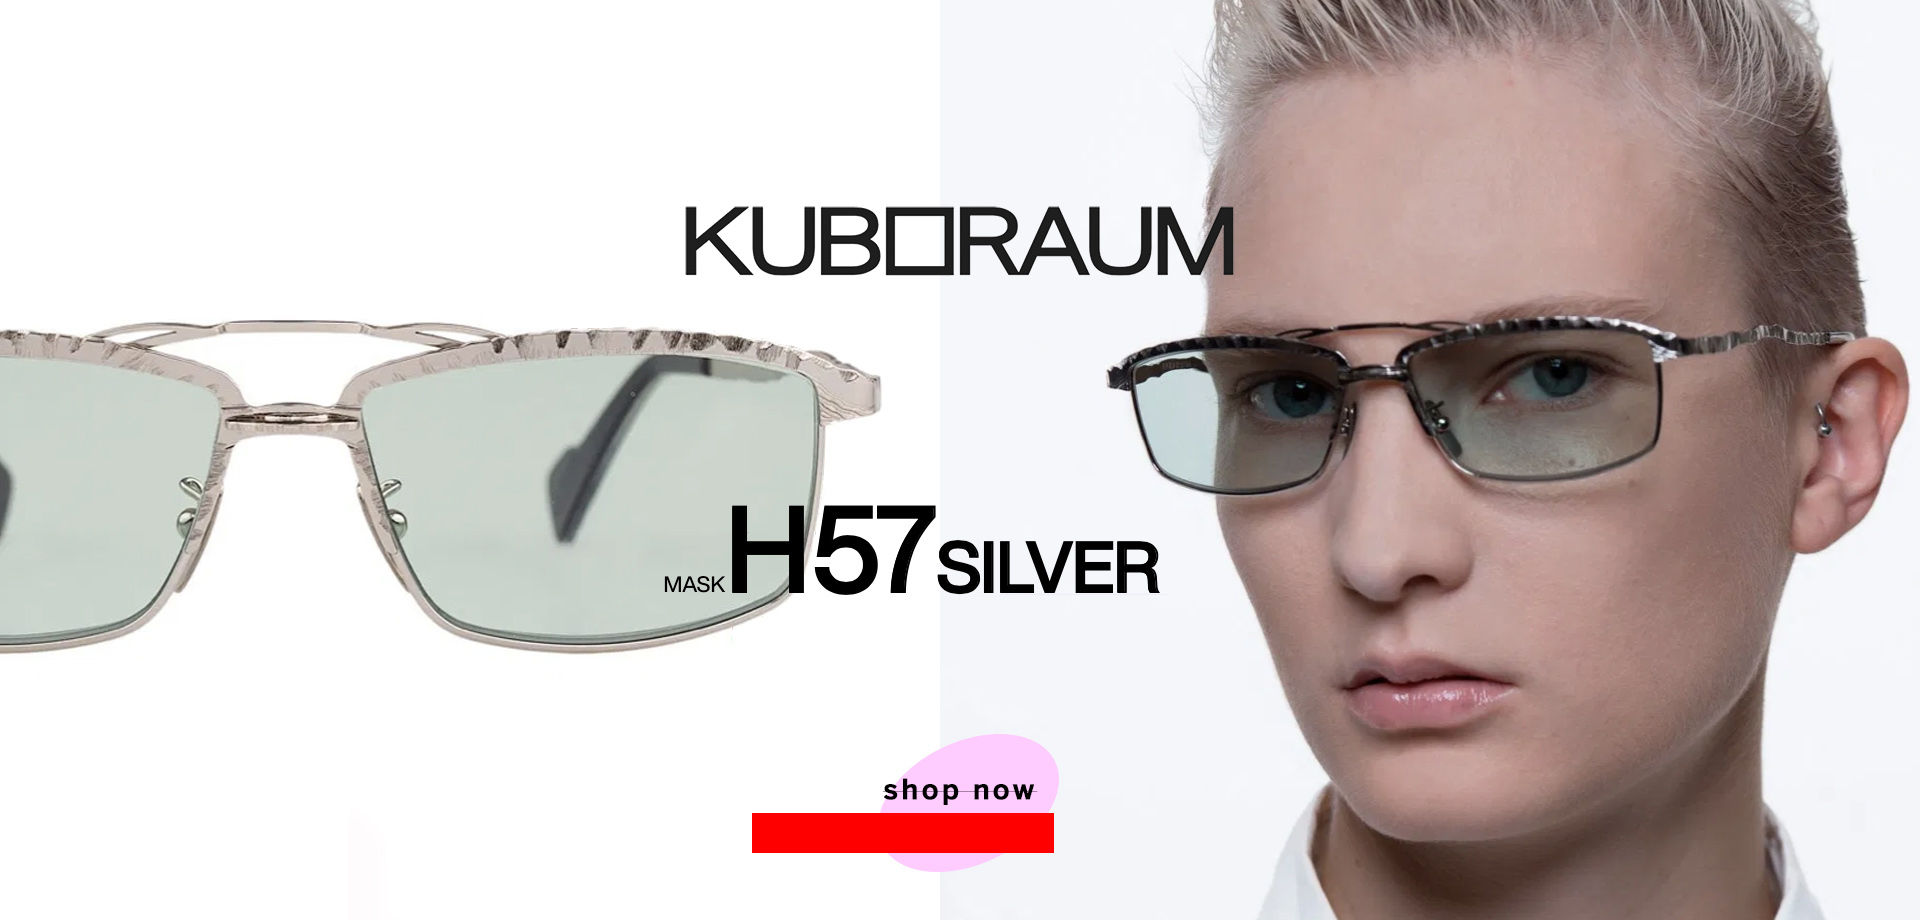 KUBORAUM Mask H57 silver rectangular double bridge metal sunglasses